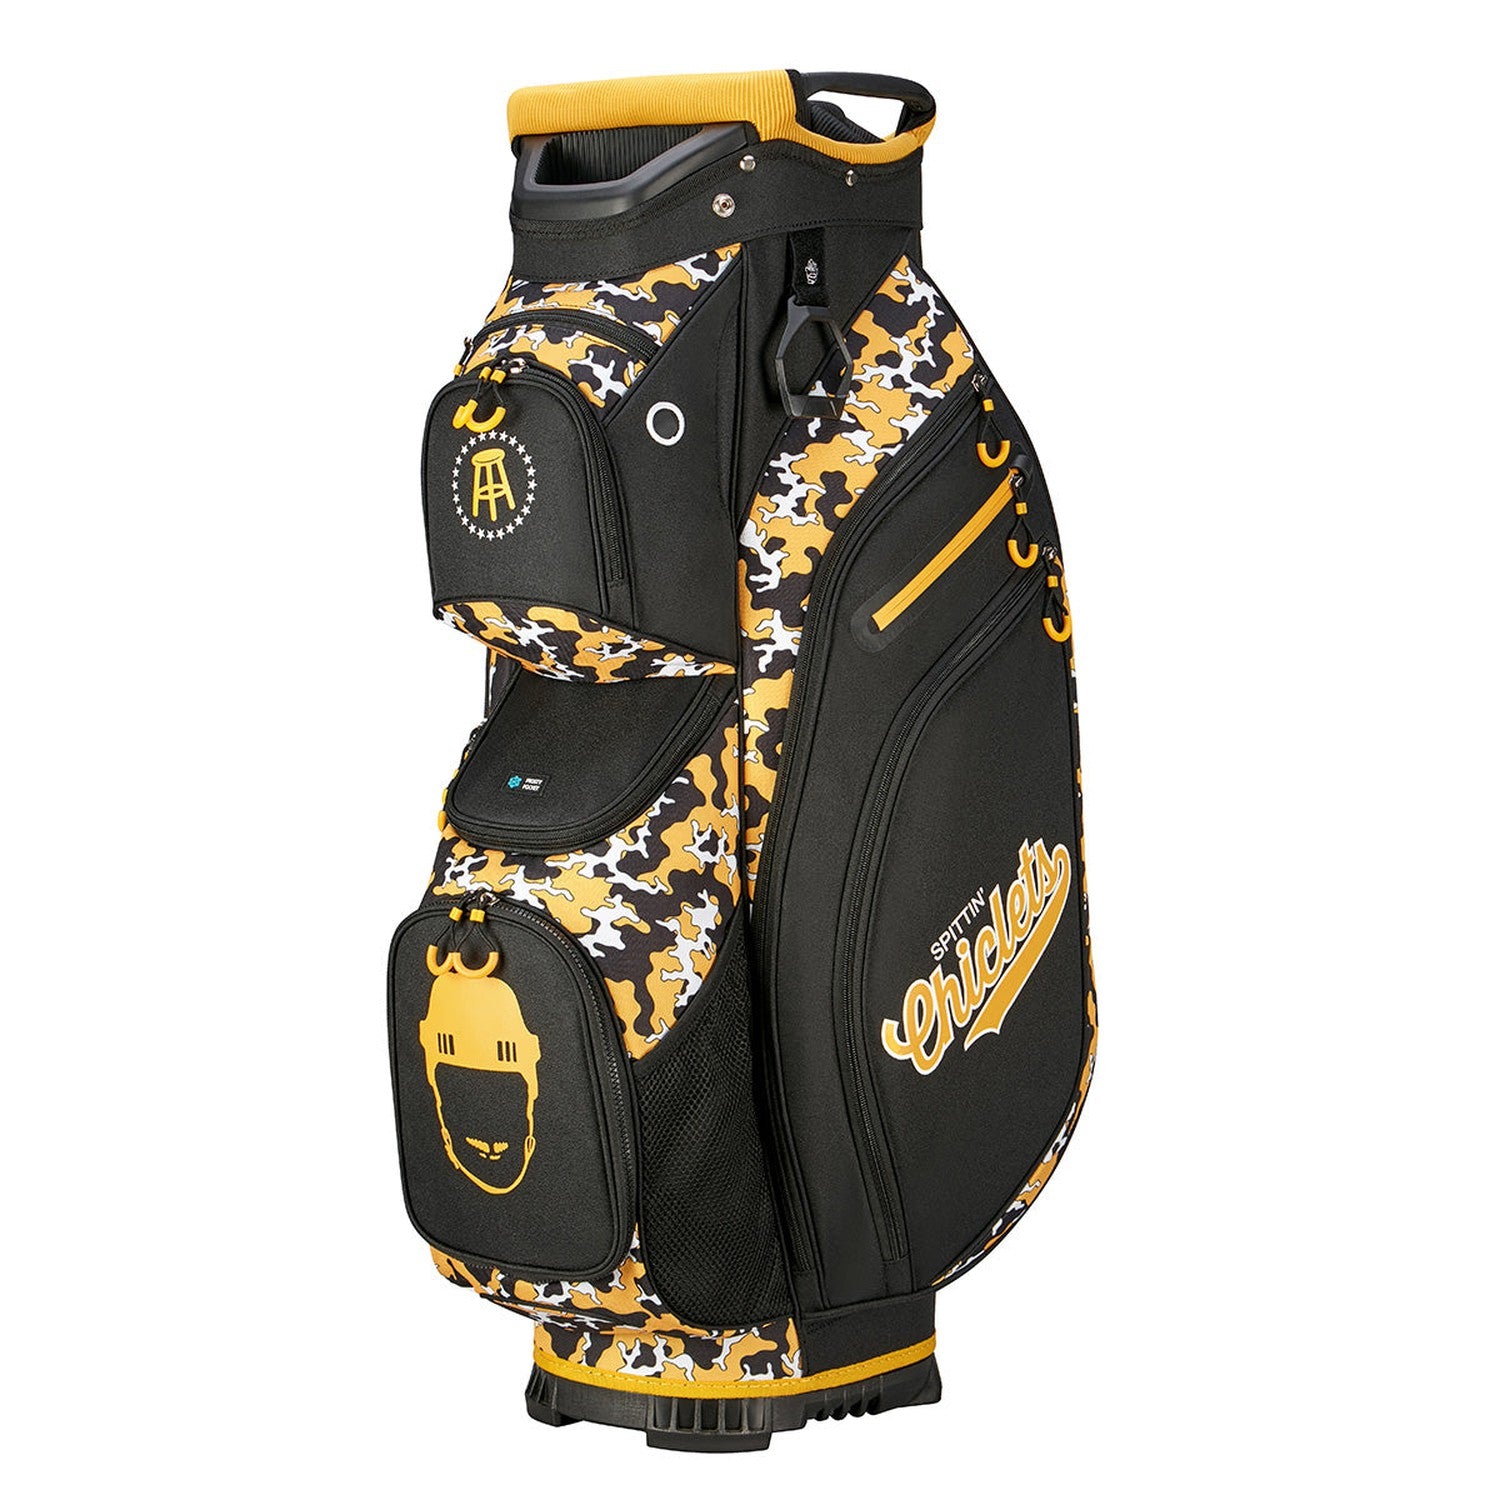 Luxury Golf Bag, Customized Golf Stand & Boston Bags, Zipper Pouch